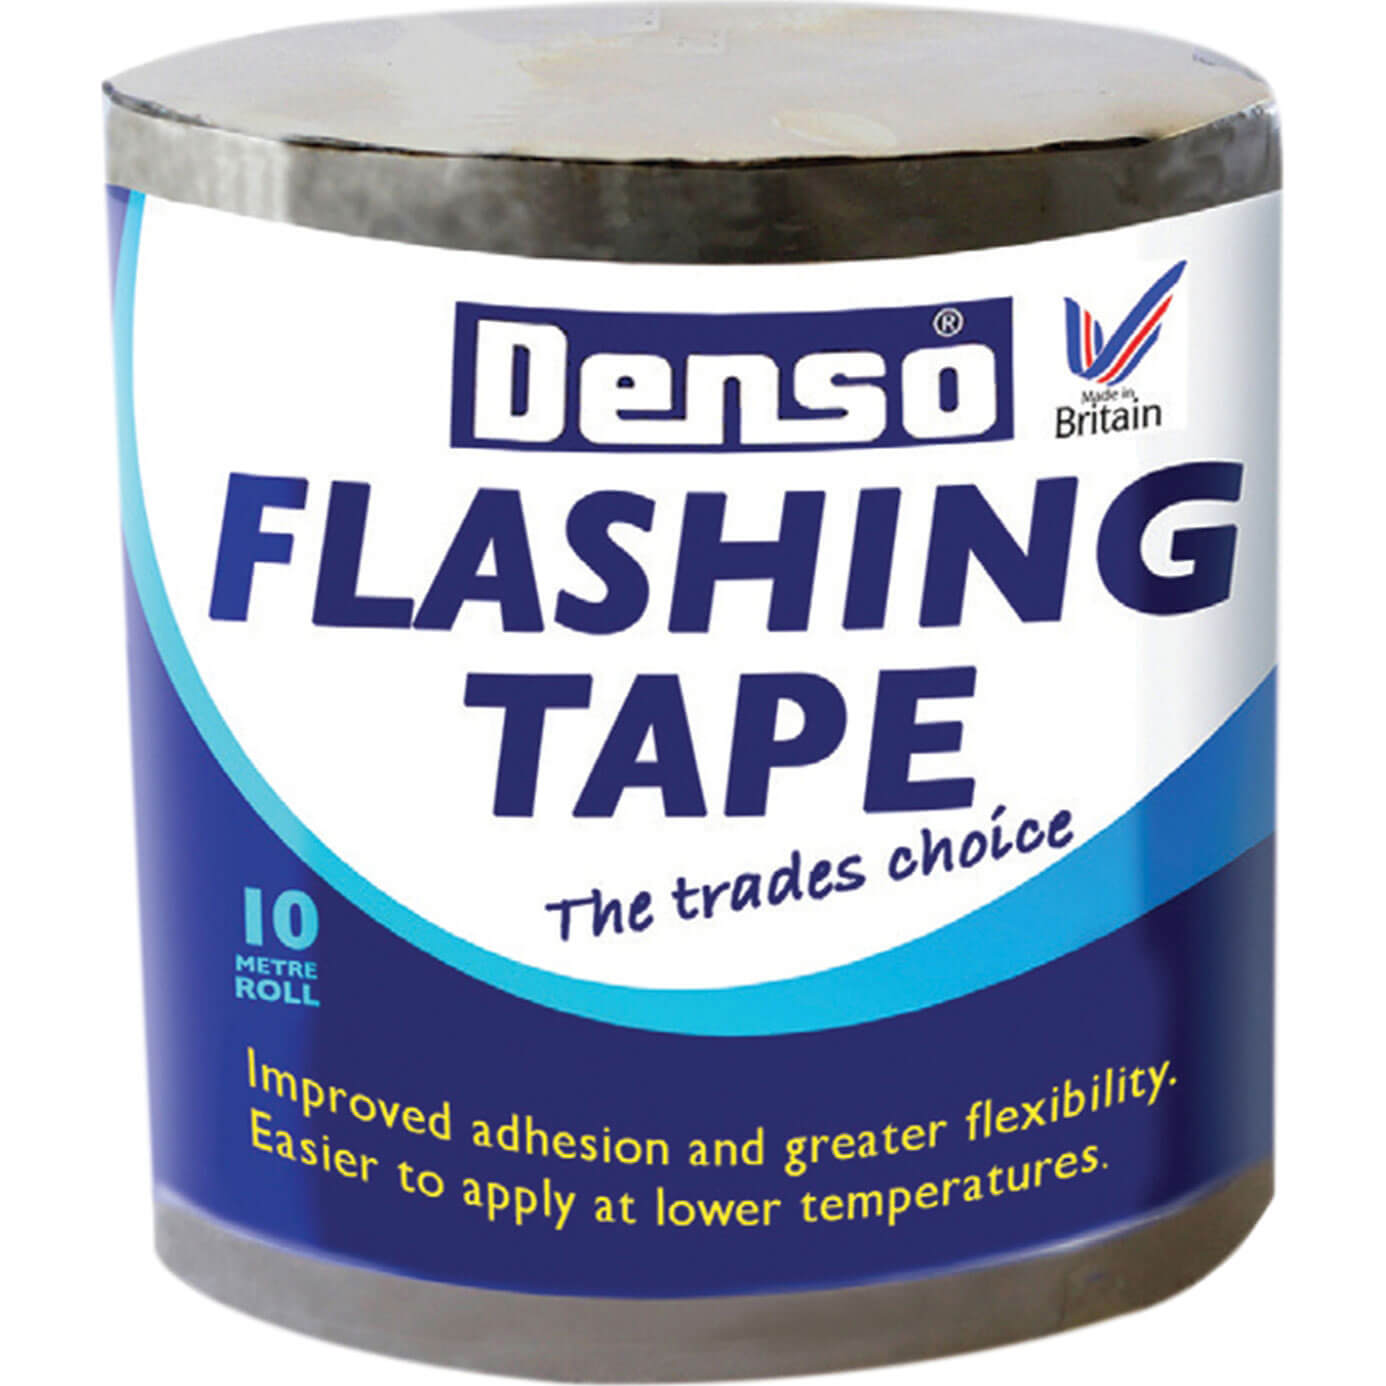 Image of Denso Flashing Tape Grey 150mm x 10m Roll